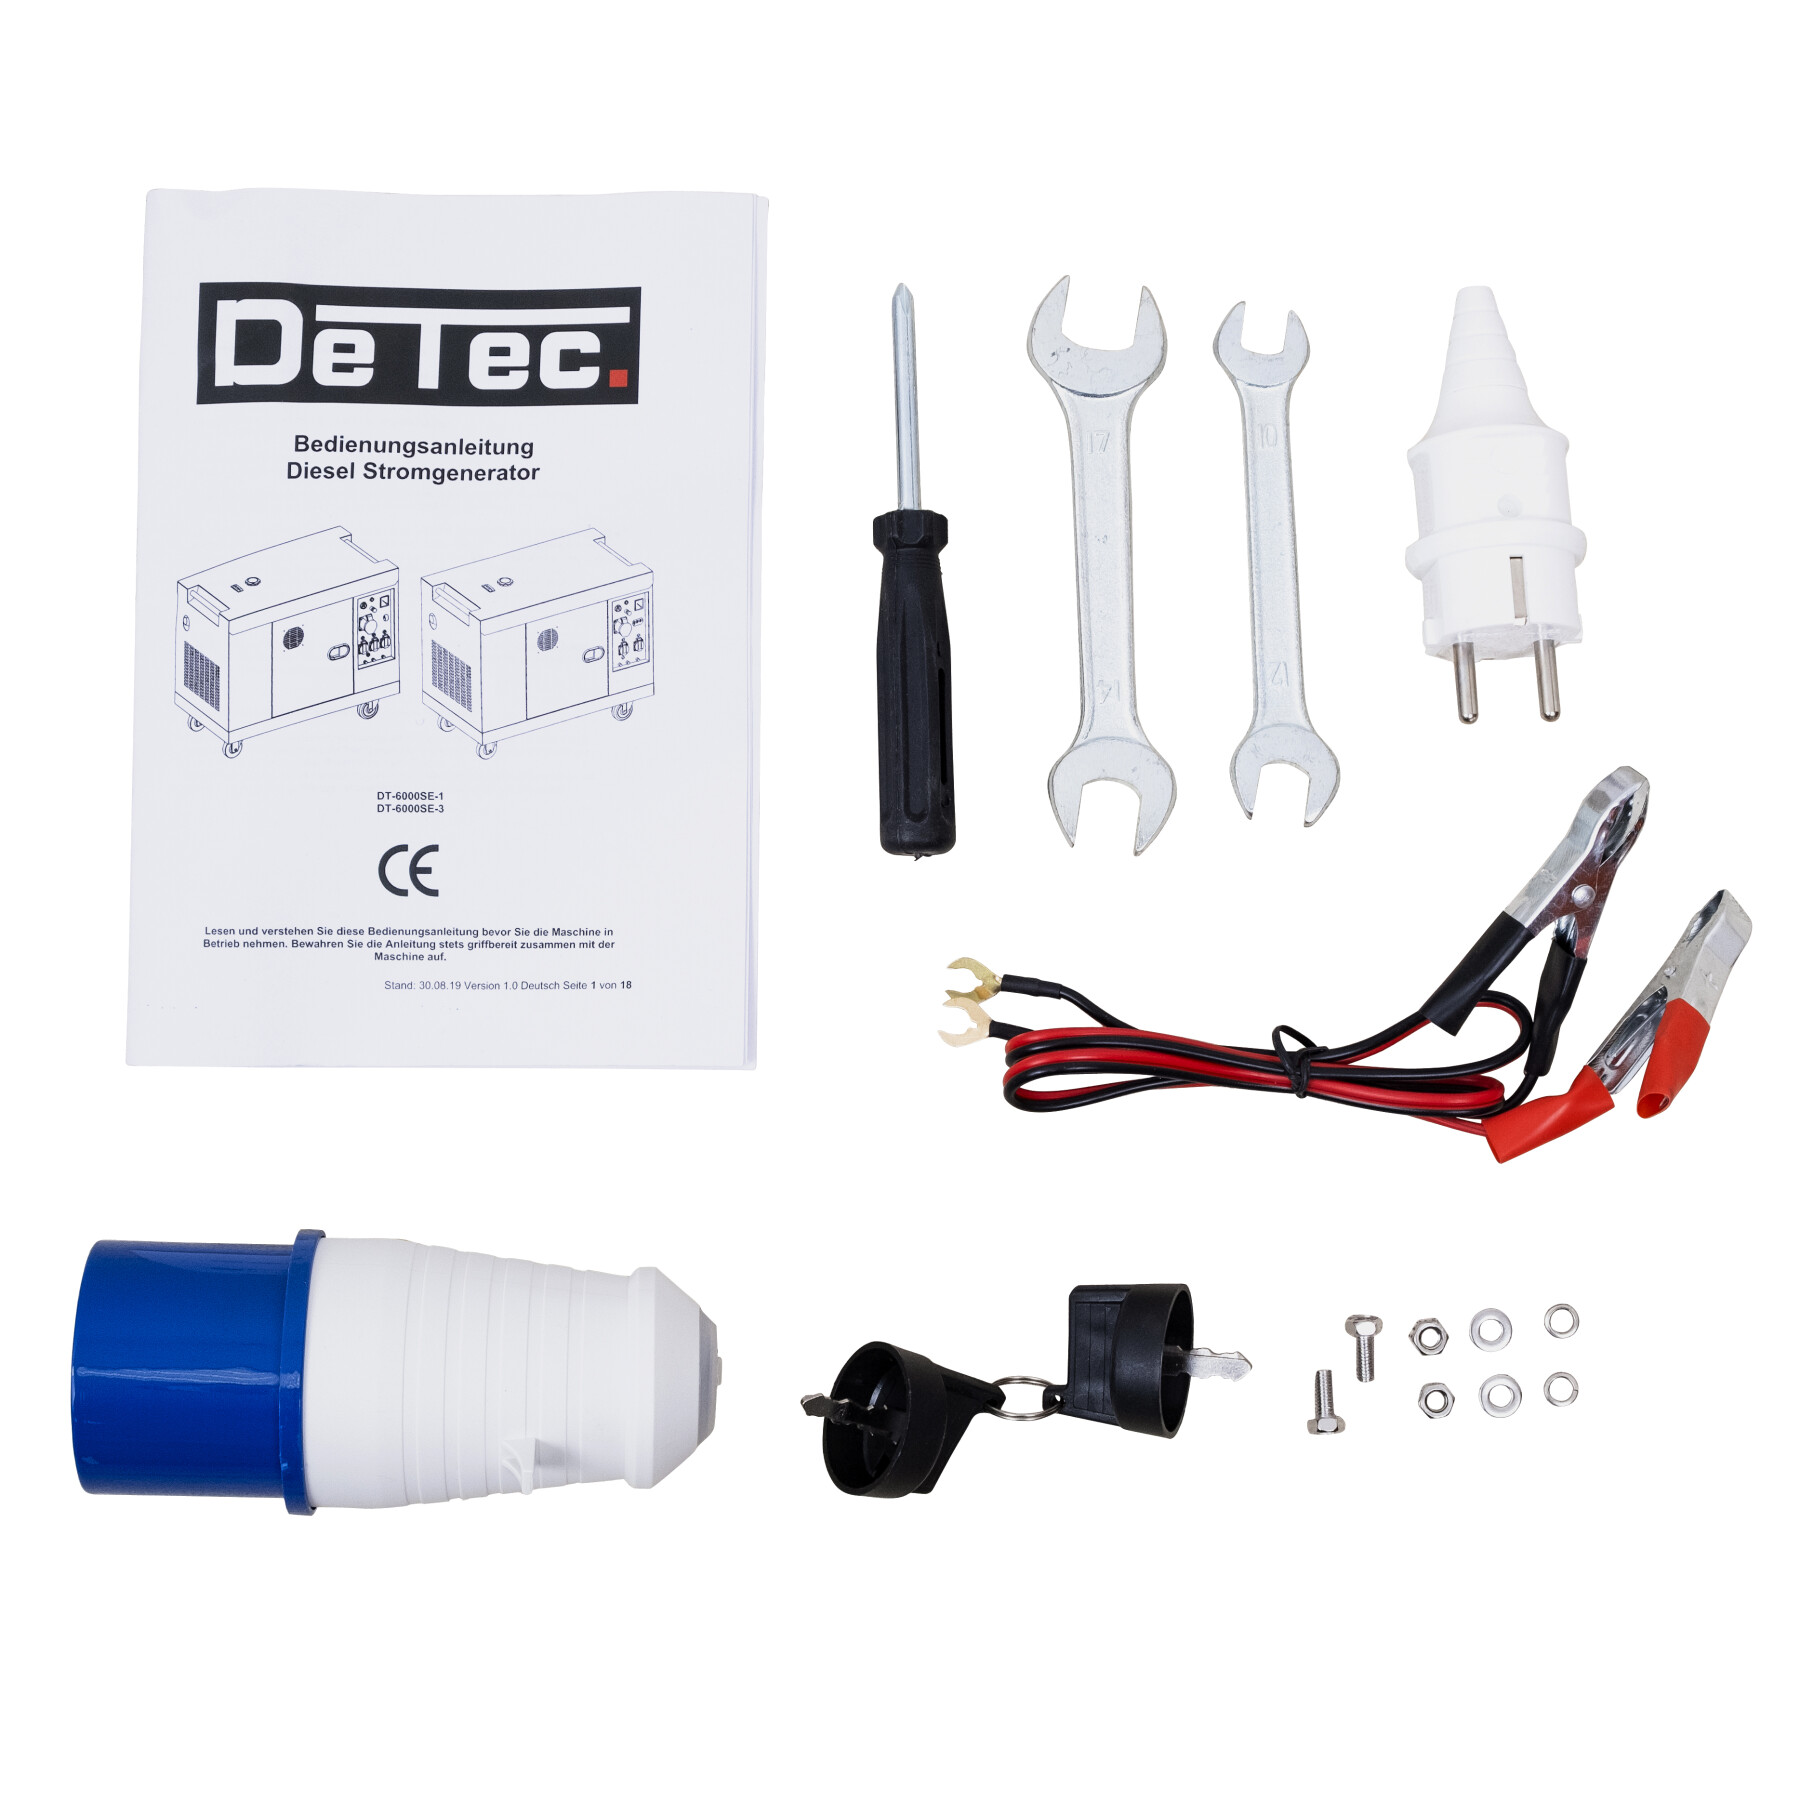 DeTec. DT-6000SE-1 Diesel-Stromerzeuger 5500W 1-Phasen